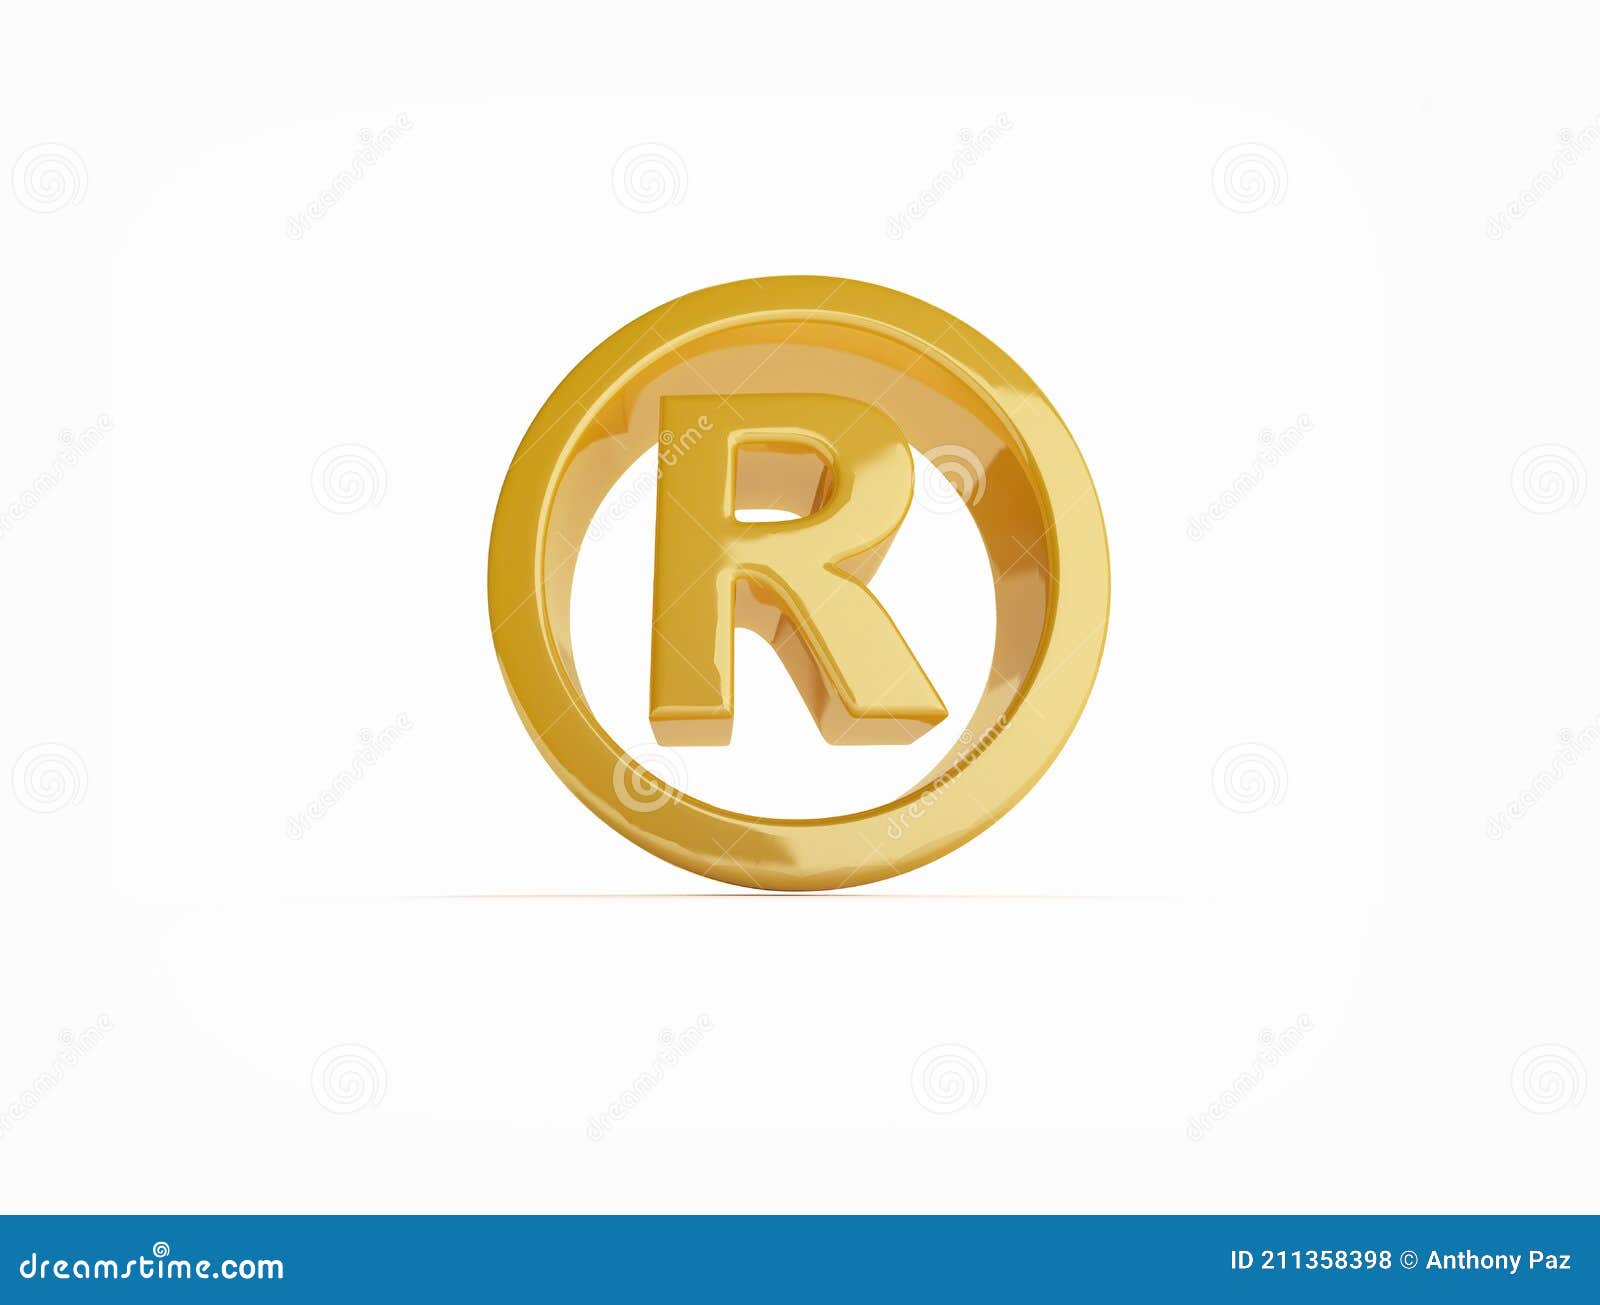 3d Golden Registered Symbol Stock Photo 9885324